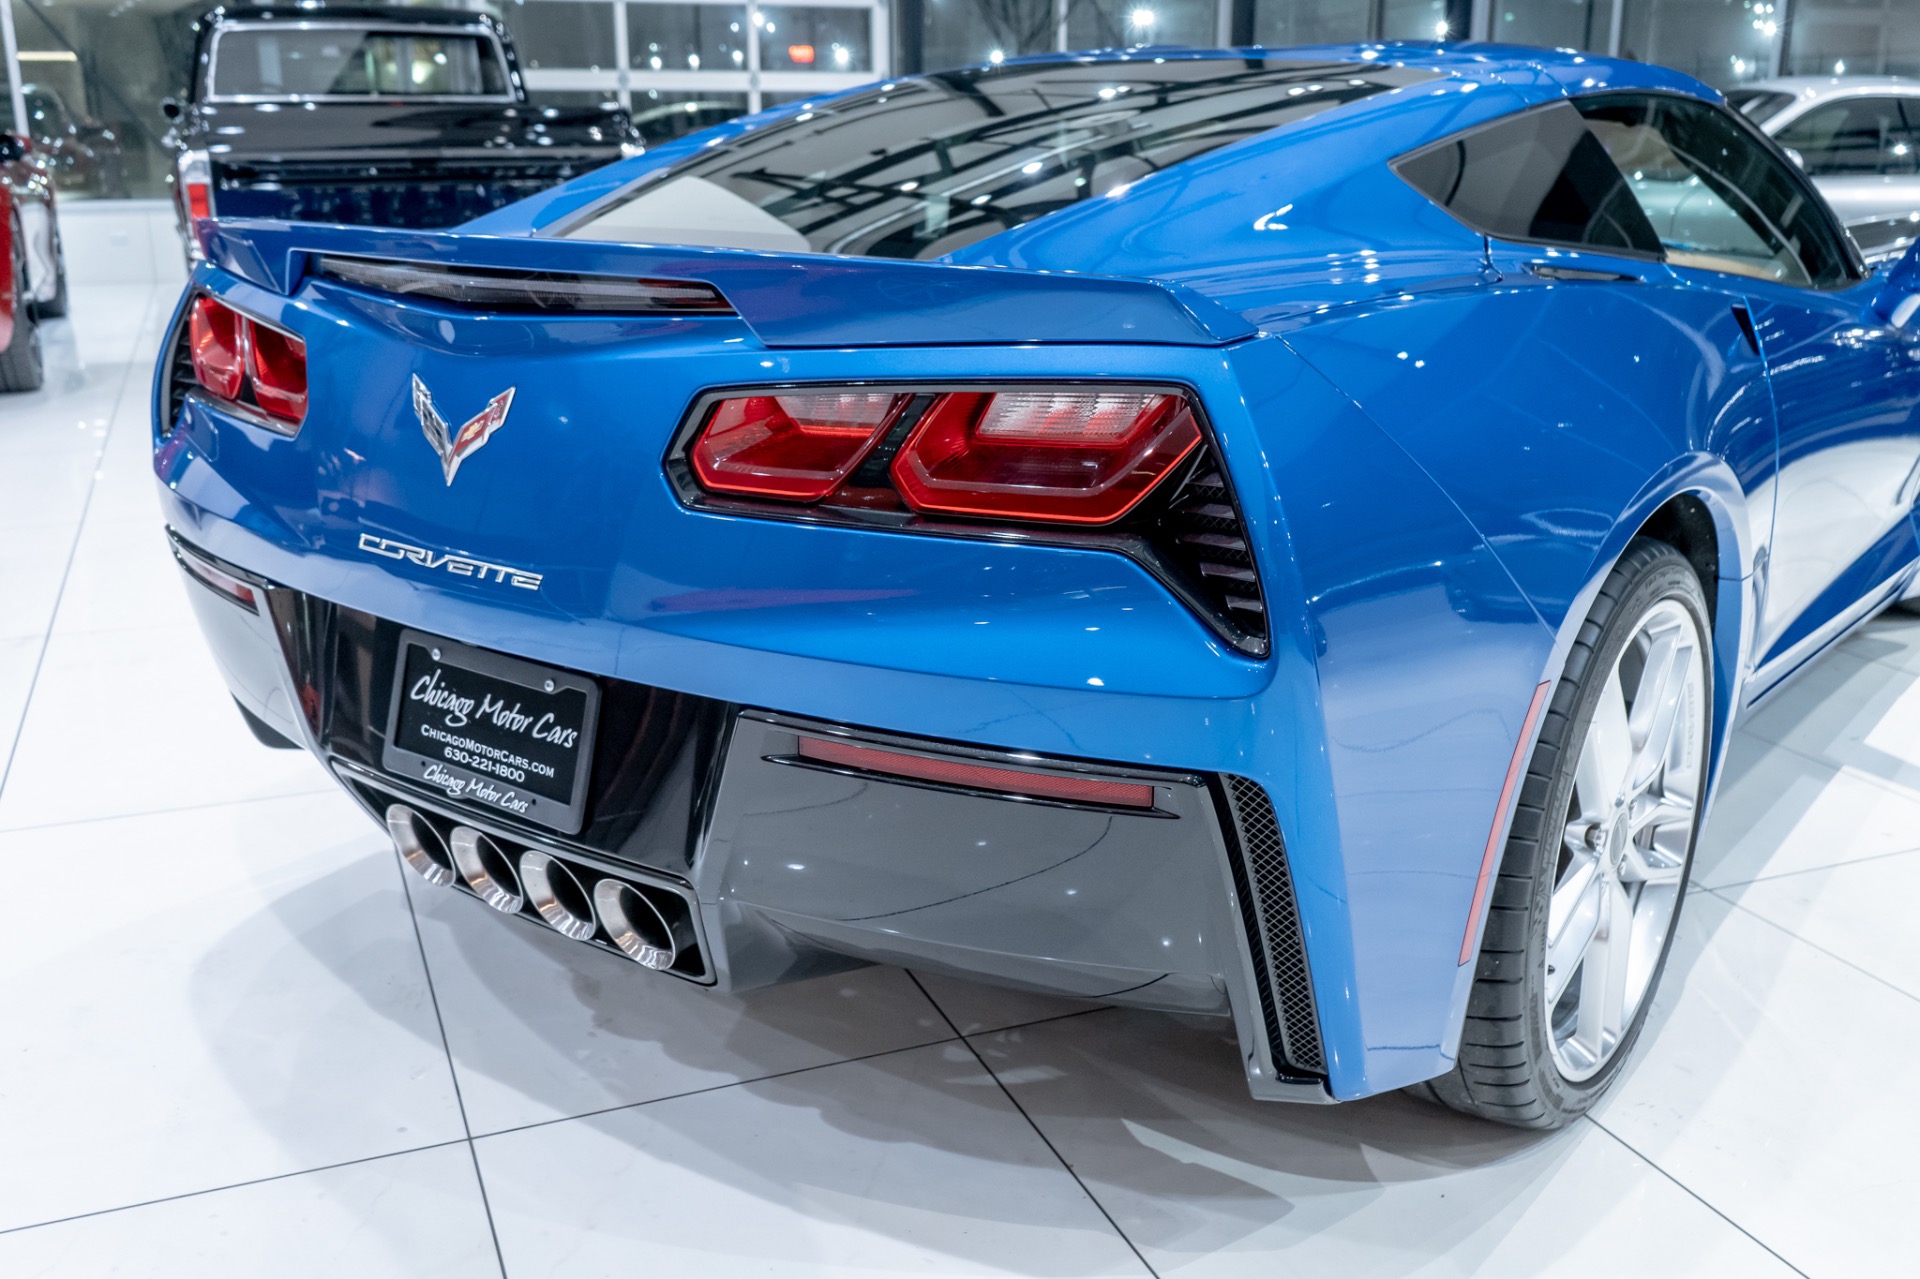 Used-2015-Chevrolet-Corvette-Stingray-Z51-Coupe-3LT-Magnetic-Ride-Control-Laguna-Blue-Low-Miles